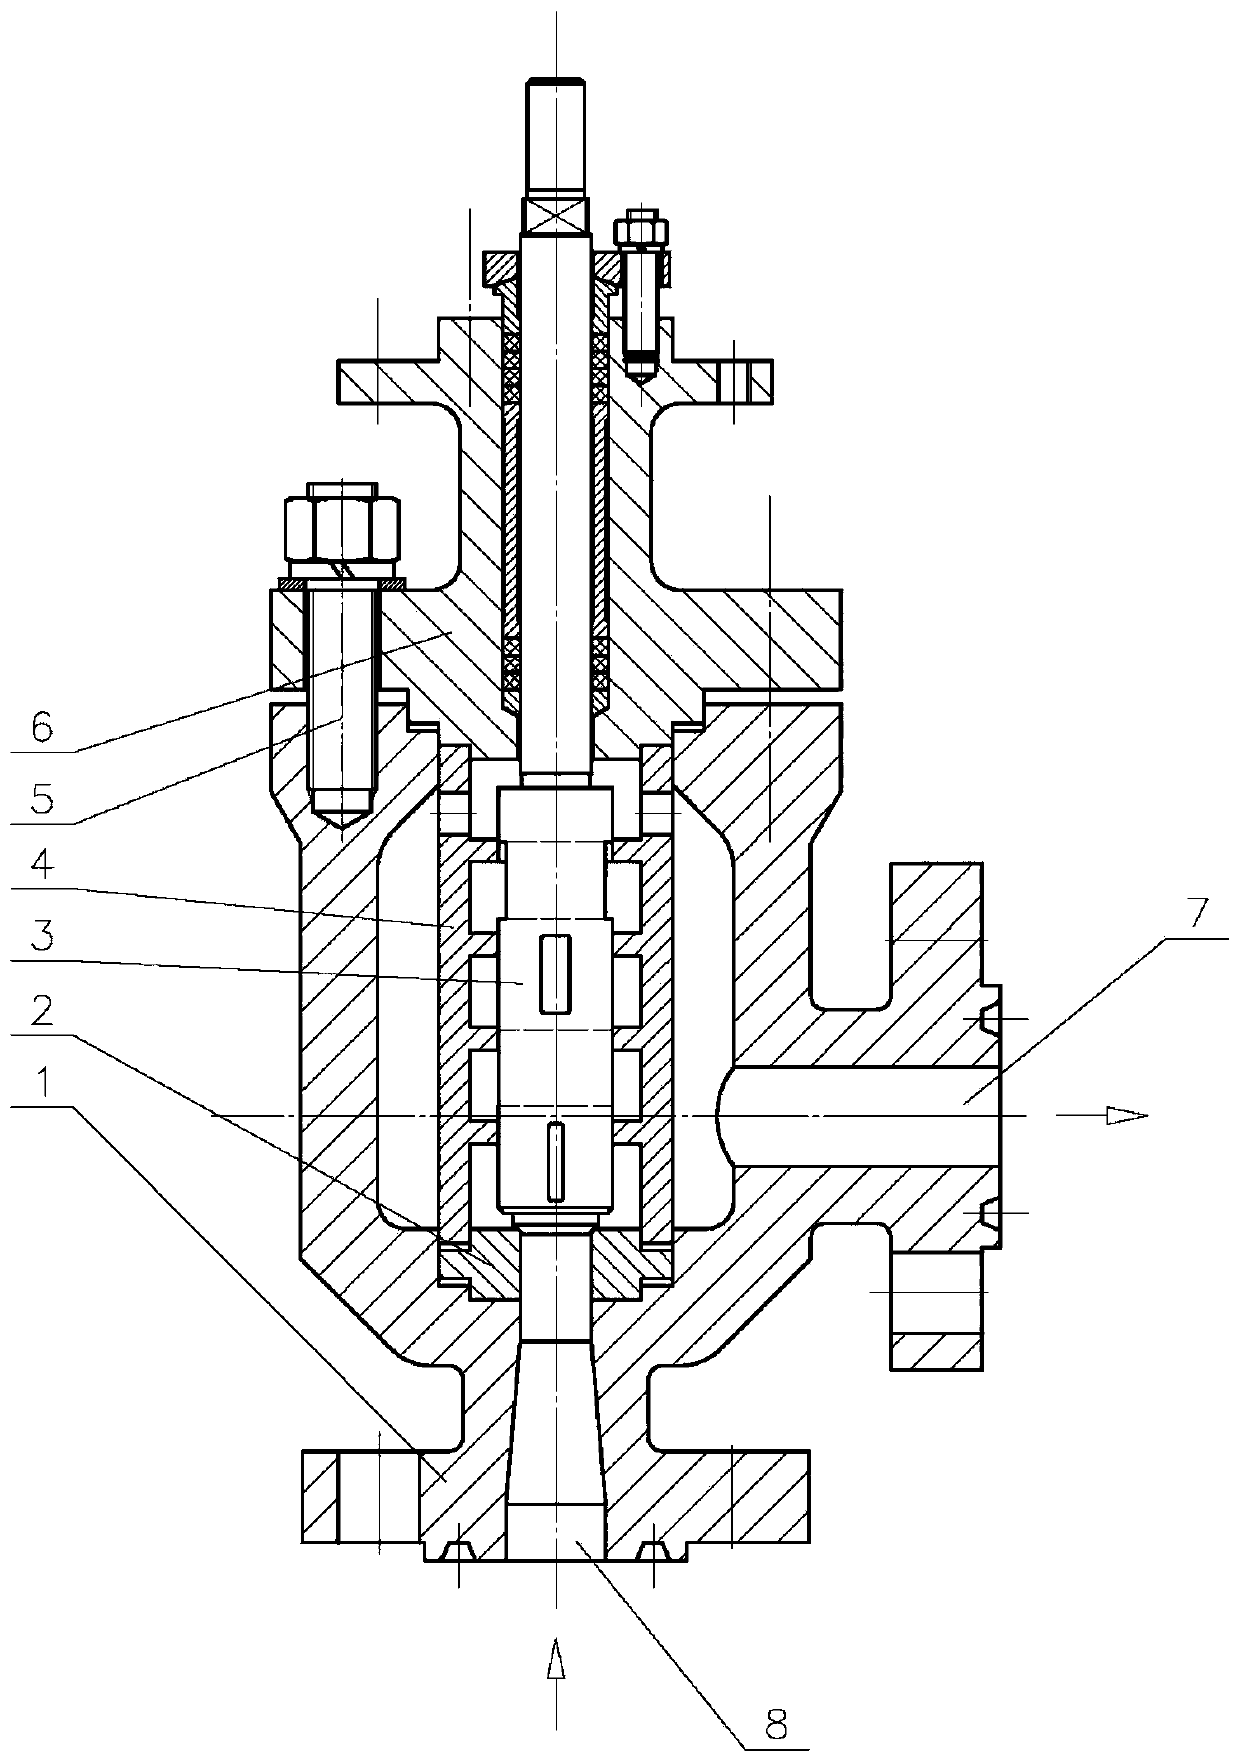 A grooved series multi-stage pressure reducing regulating valve